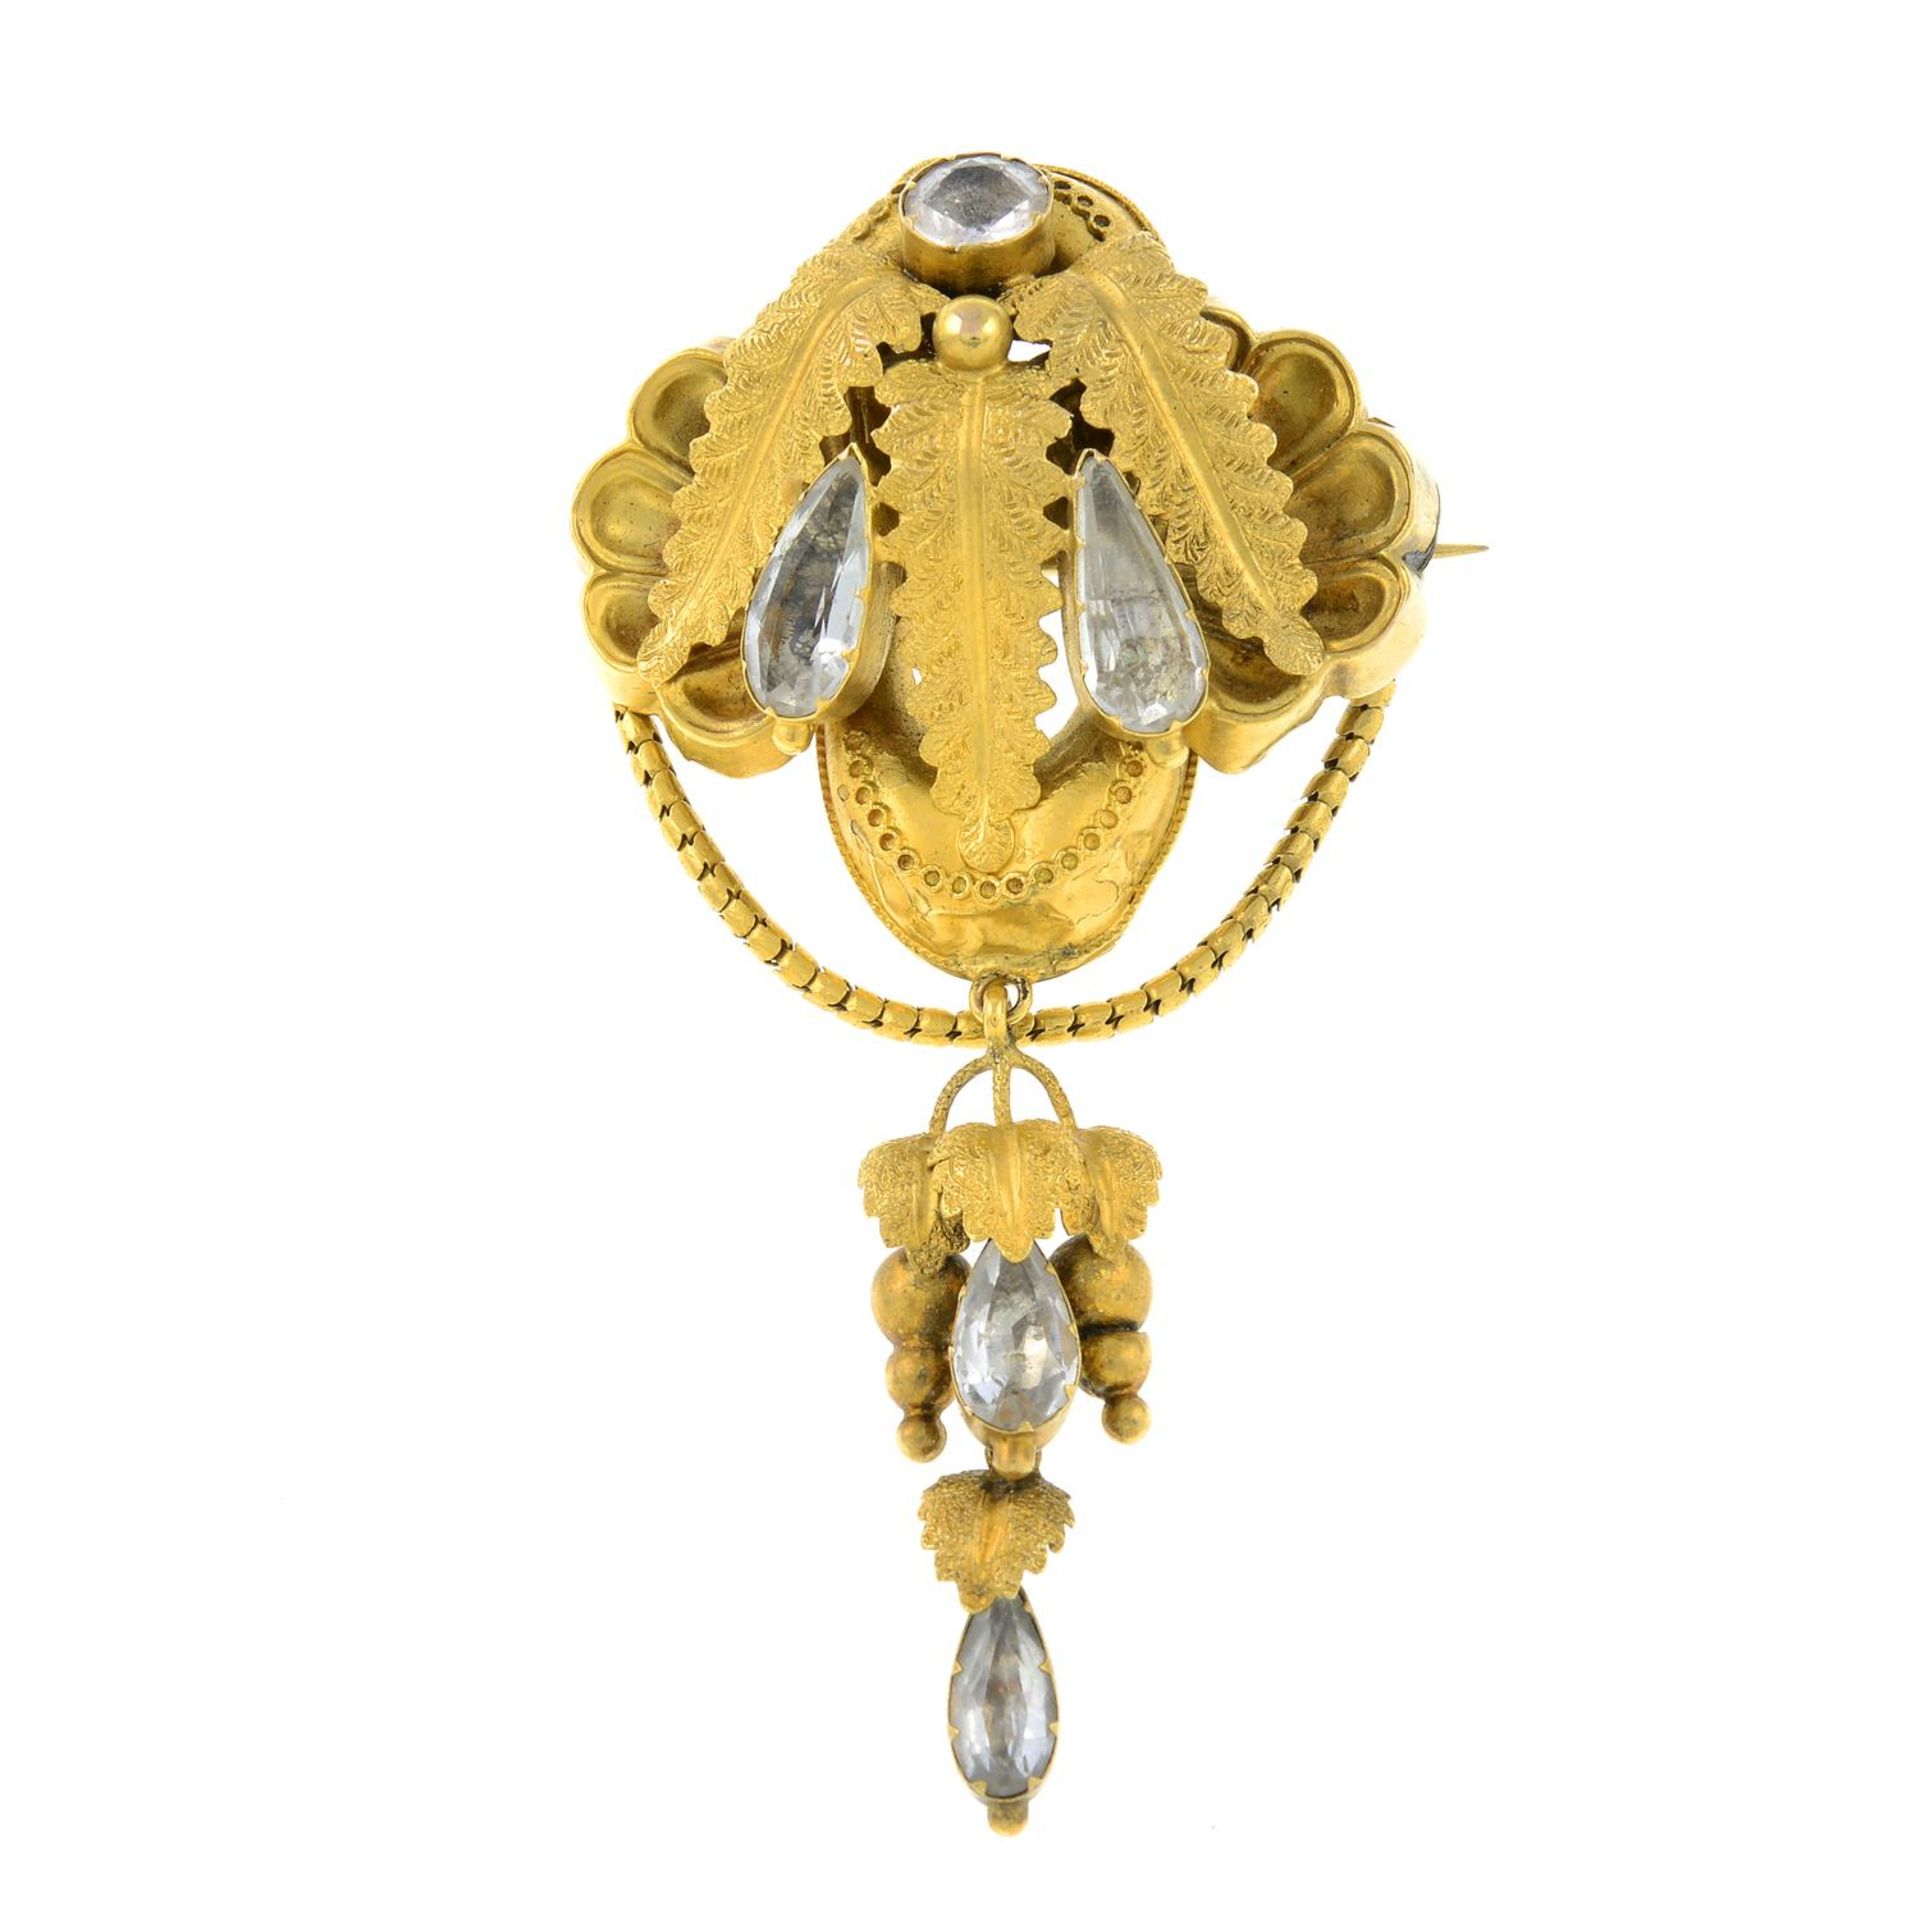 A late 19th century gold, colourless-gem foliate brooch/pendant.